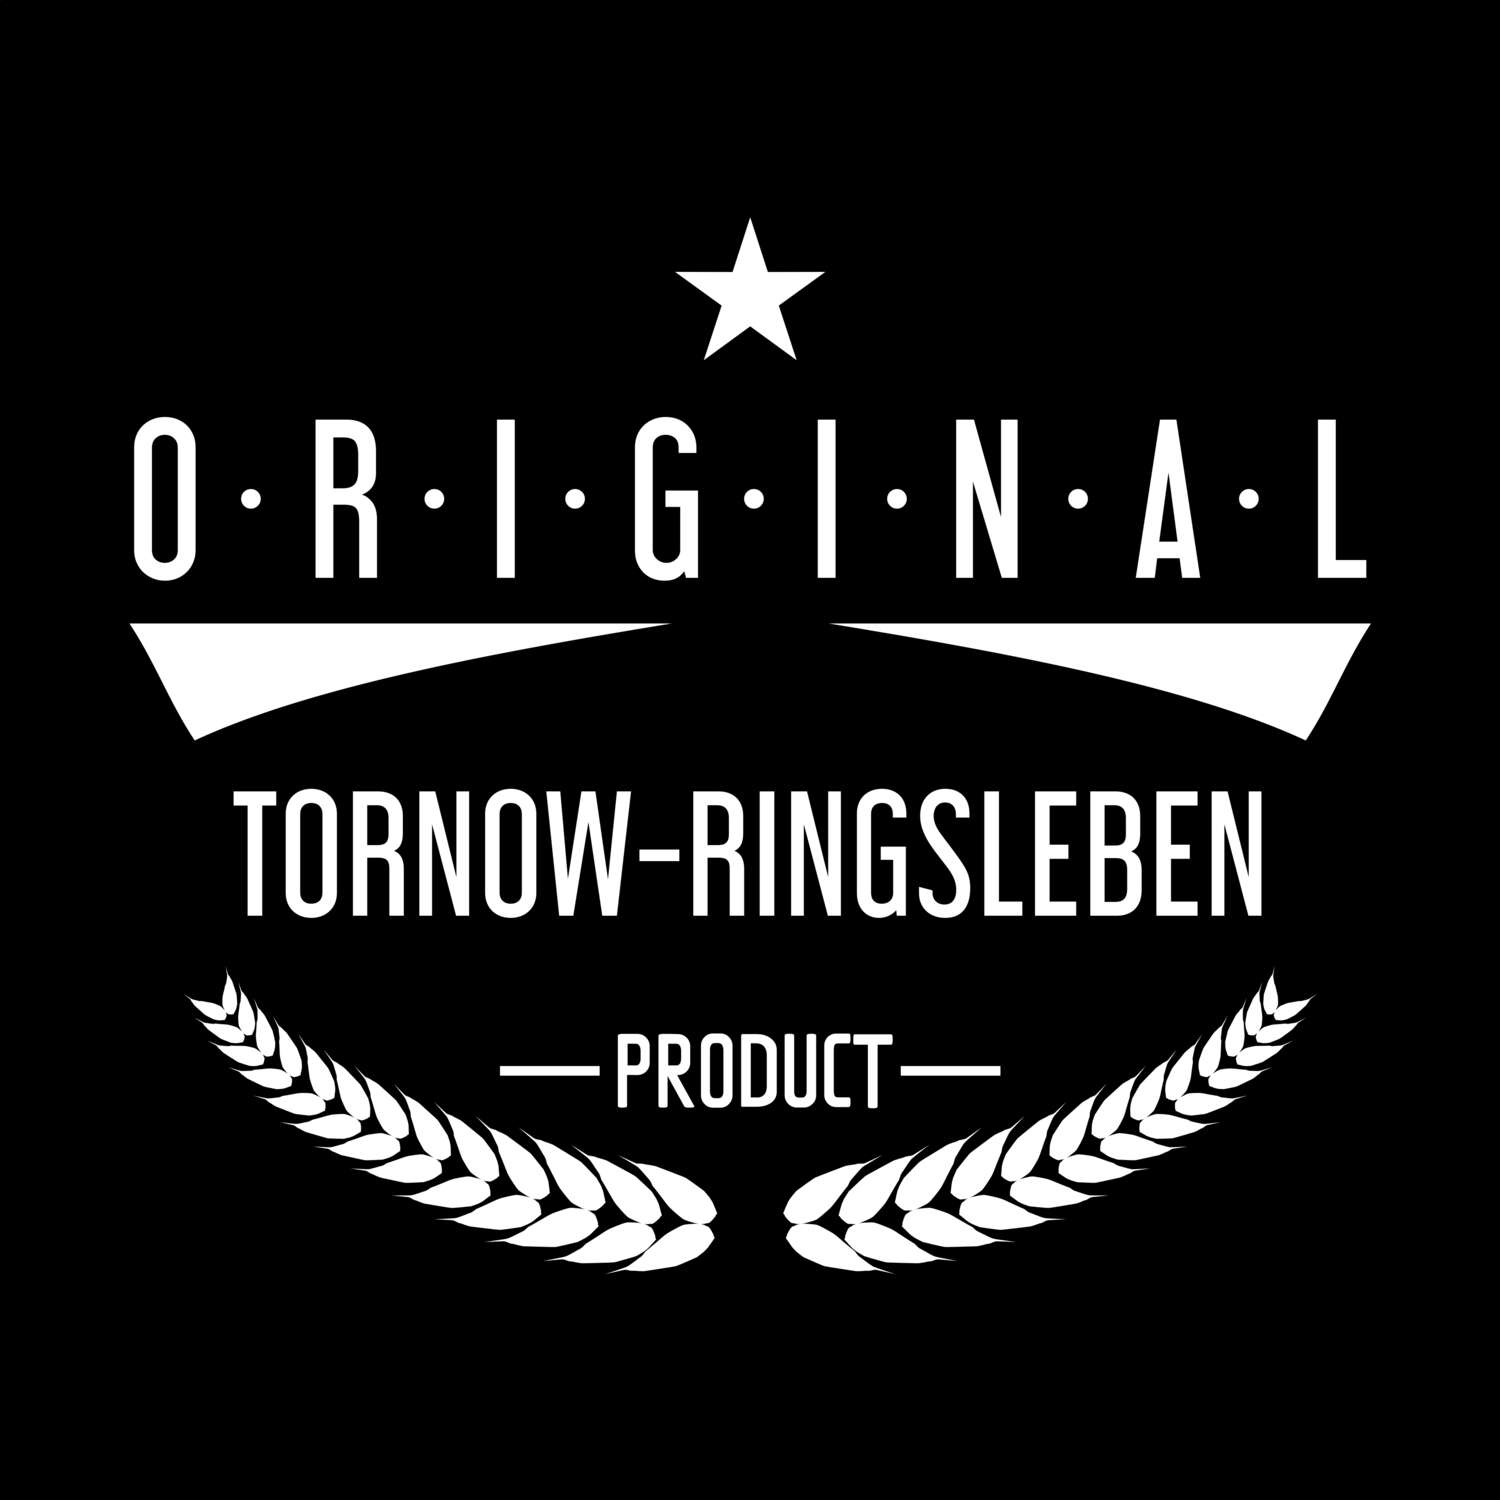 Tornow-Ringsleben T-Shirt »Original Product«